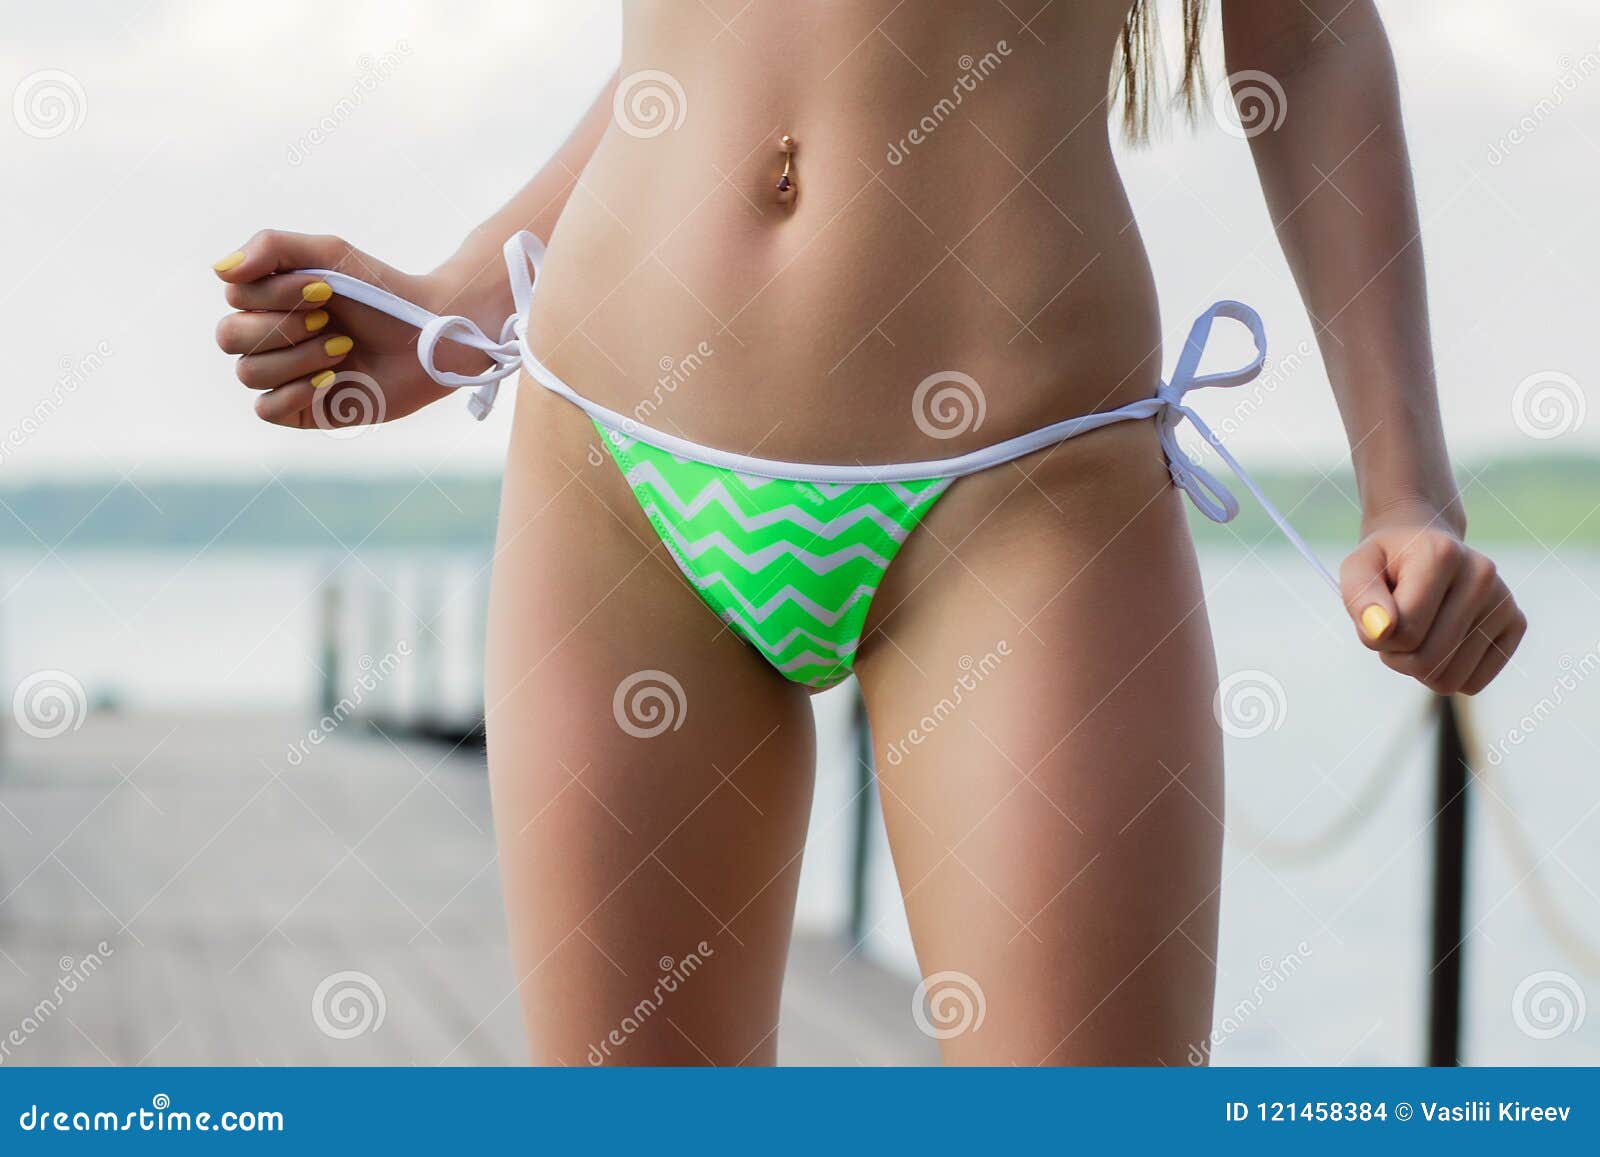 anne brooker share women taking off their bikinis photos